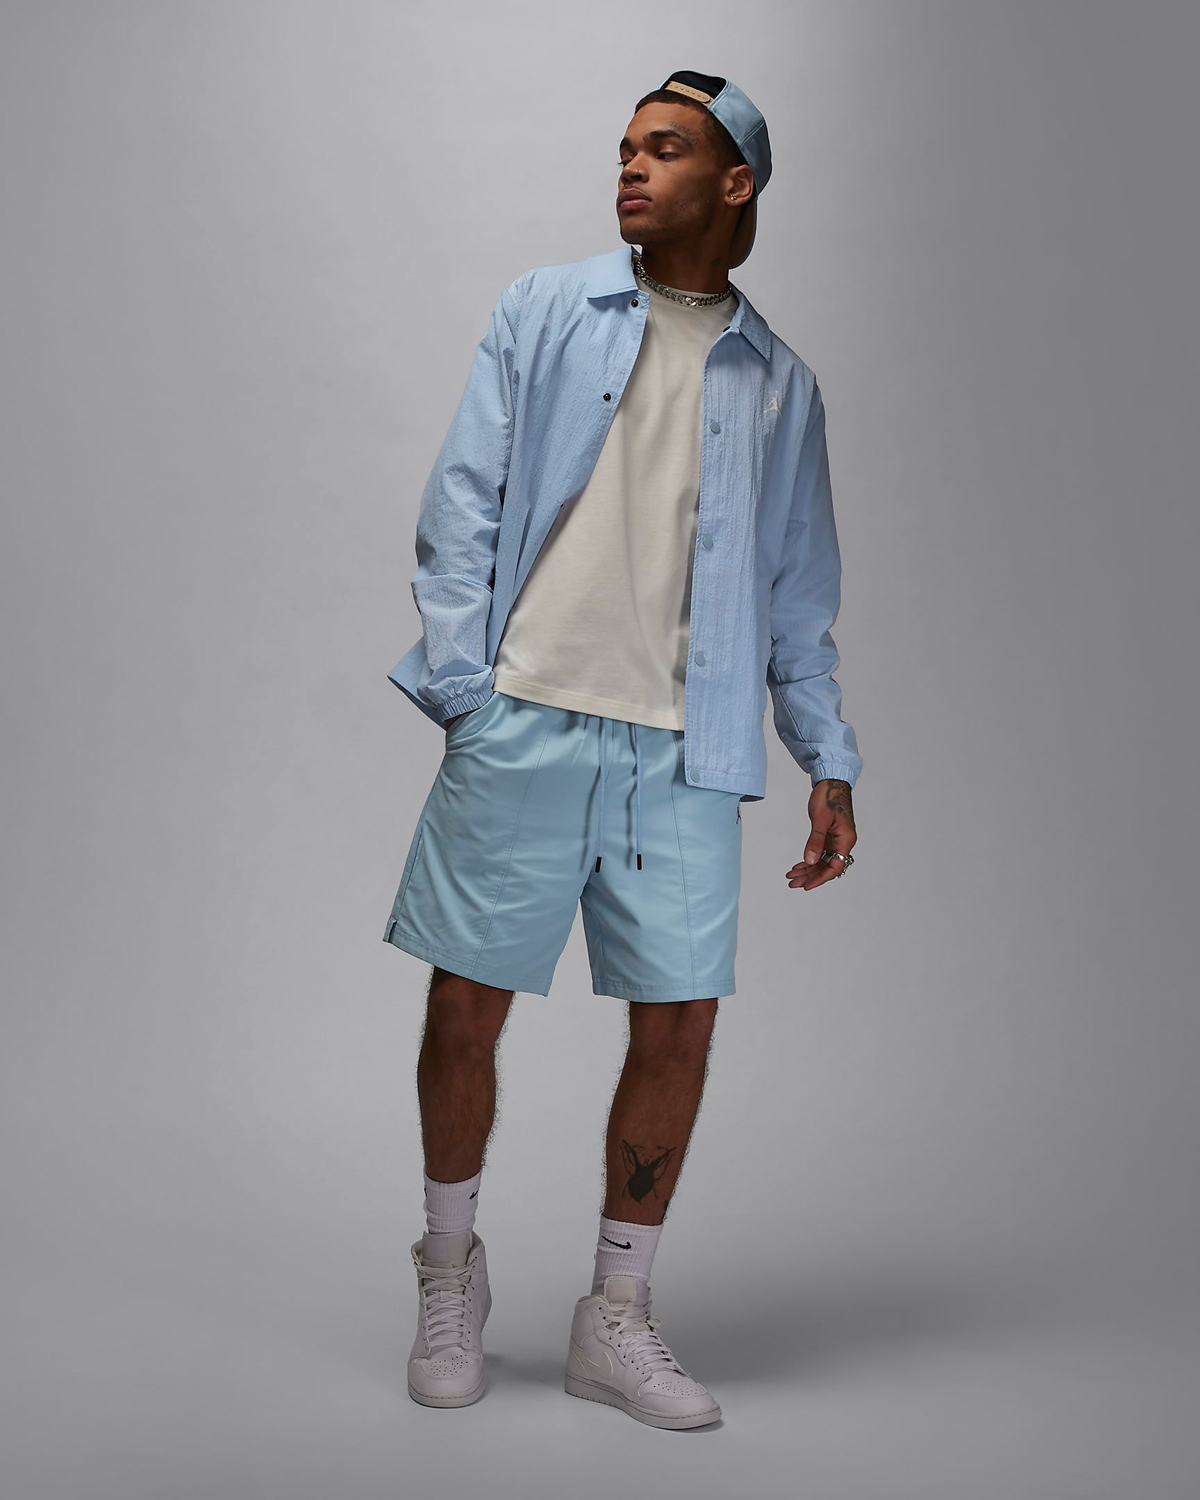 Jordan-Essentials-Woven-Shorts-Blue-Grey-Outfit